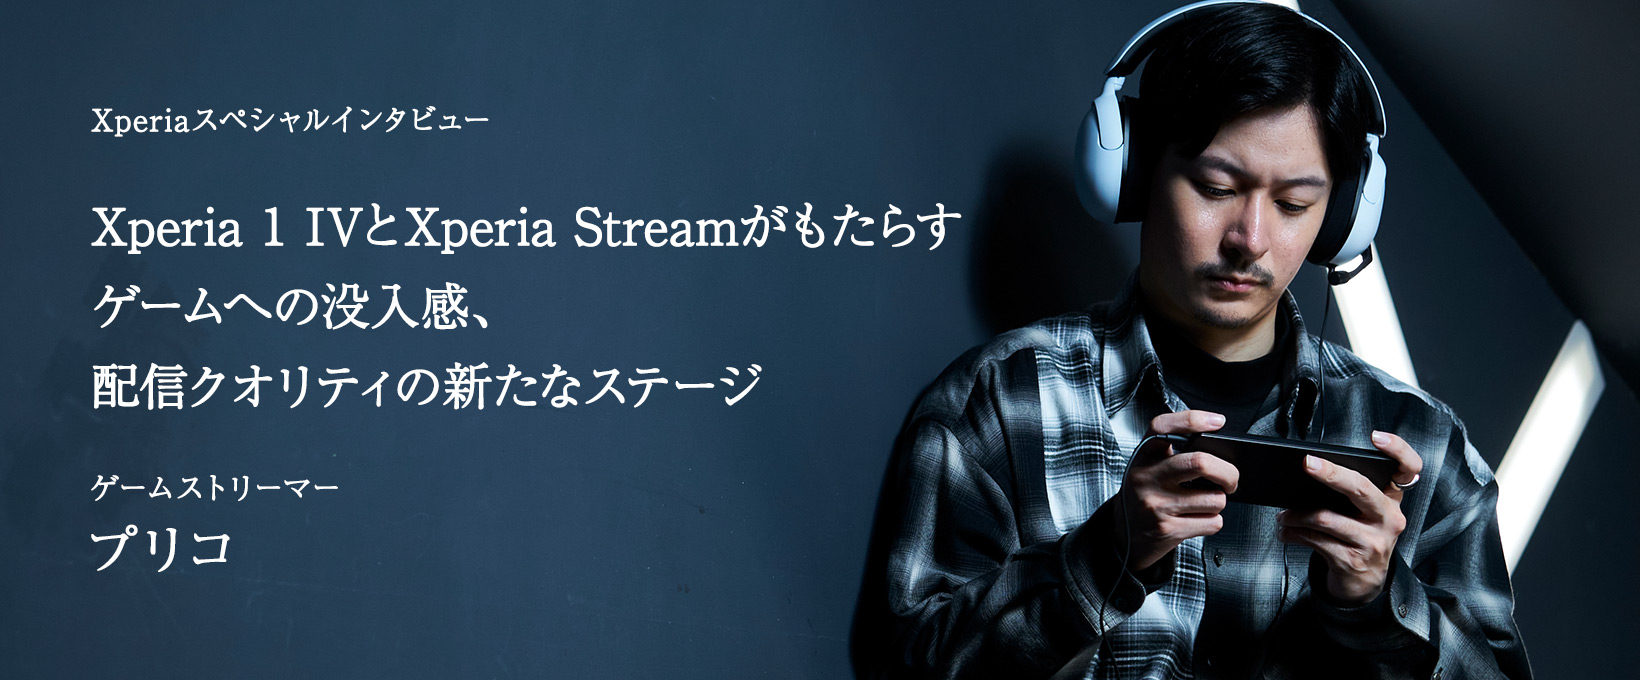 Xperiaスペシャルインタビュー Xperia 1 IVとXperia Streamがもたらすゲームへの没入感、配信クオリティの新たなステージ ゲームストリーマー プリコ